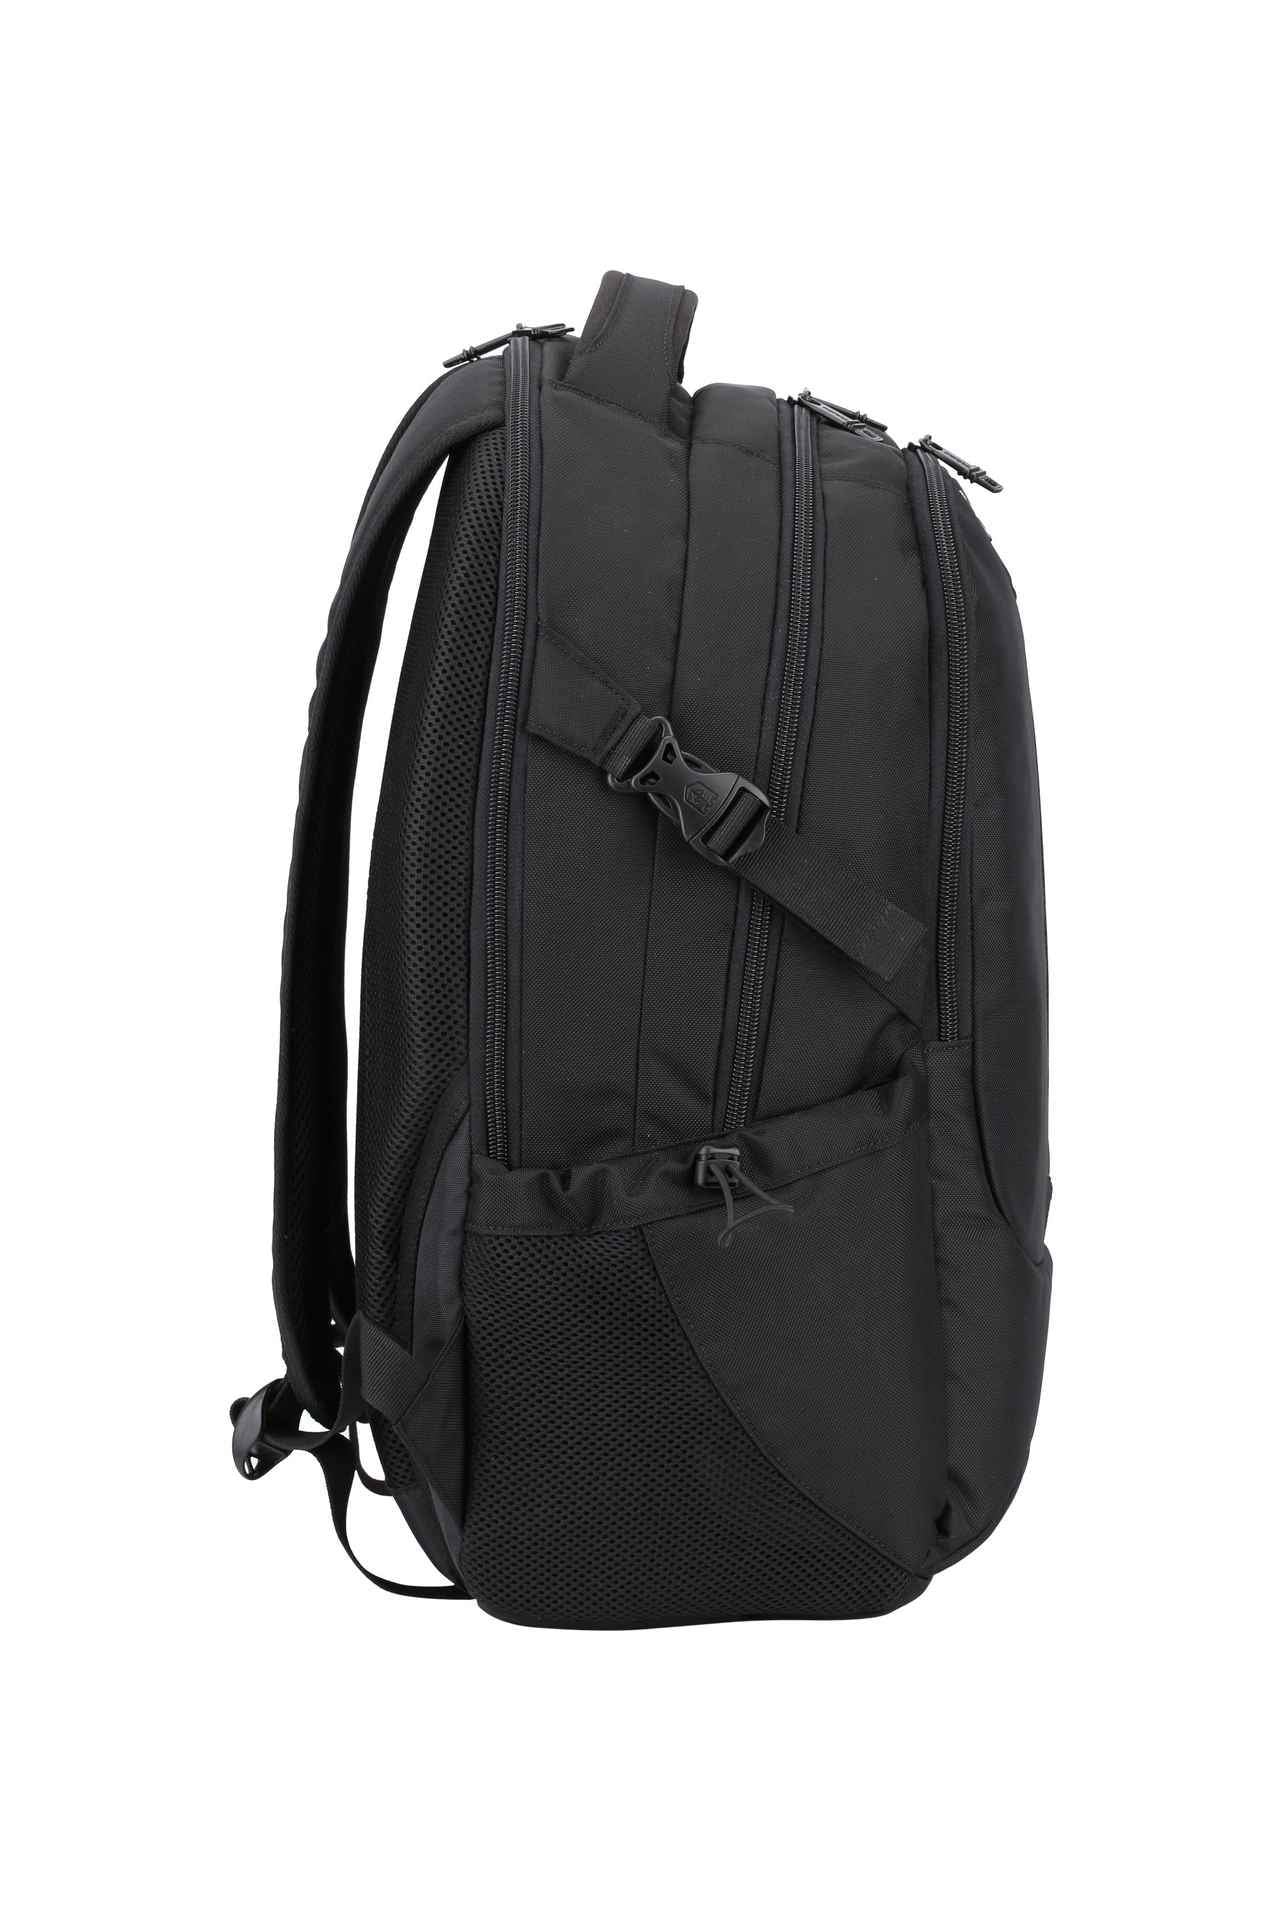 RUIGOR ICON 82 Laptop Backpack Black